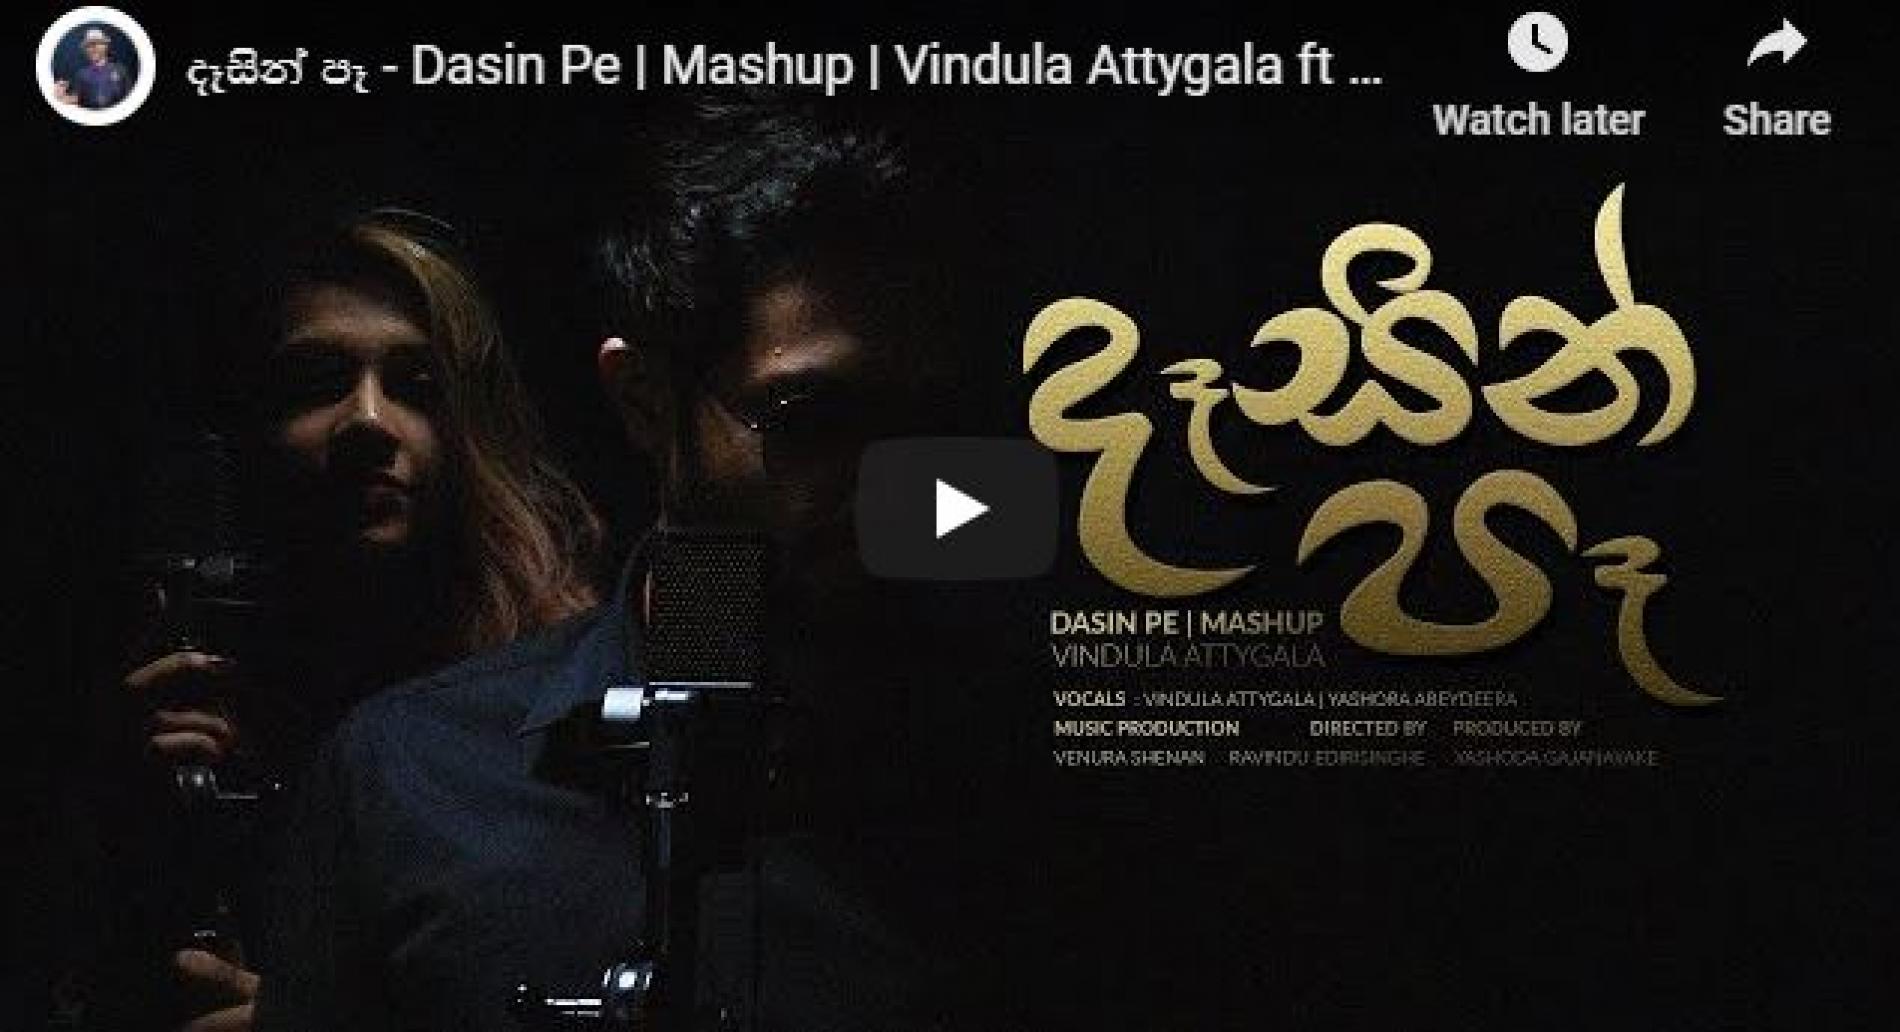 New Music : දෑසින් පෑ – Dasin Pe | Mashup | Vindula Attygala ft Yashora Abeydeera